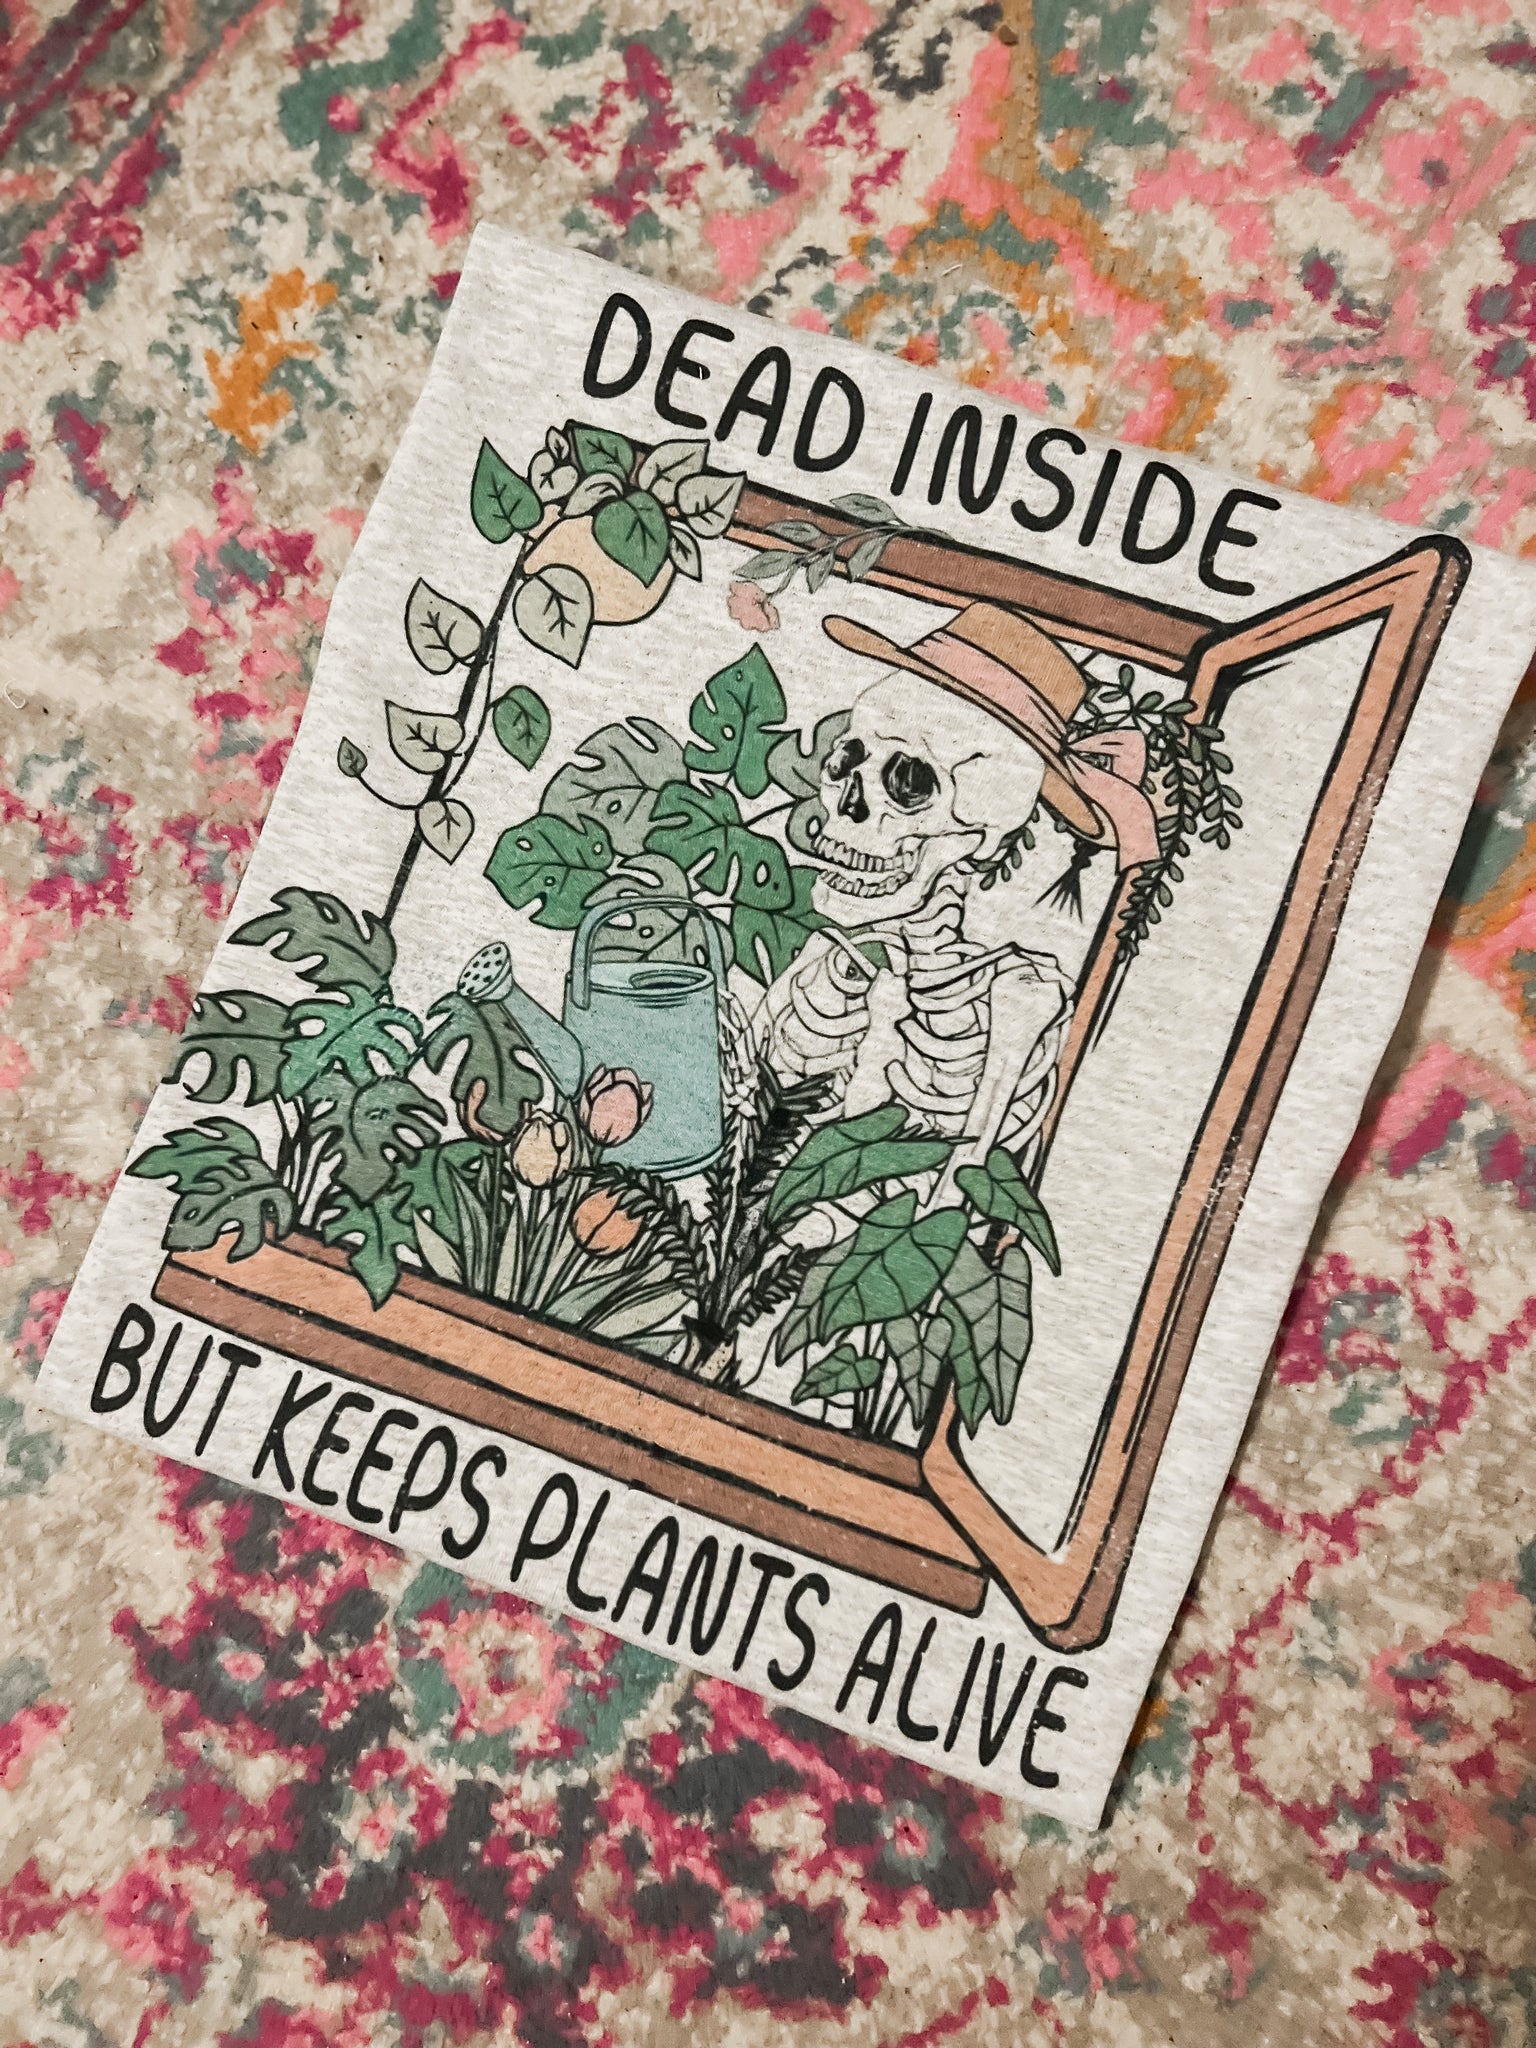 Dead inside but keeps plants alive